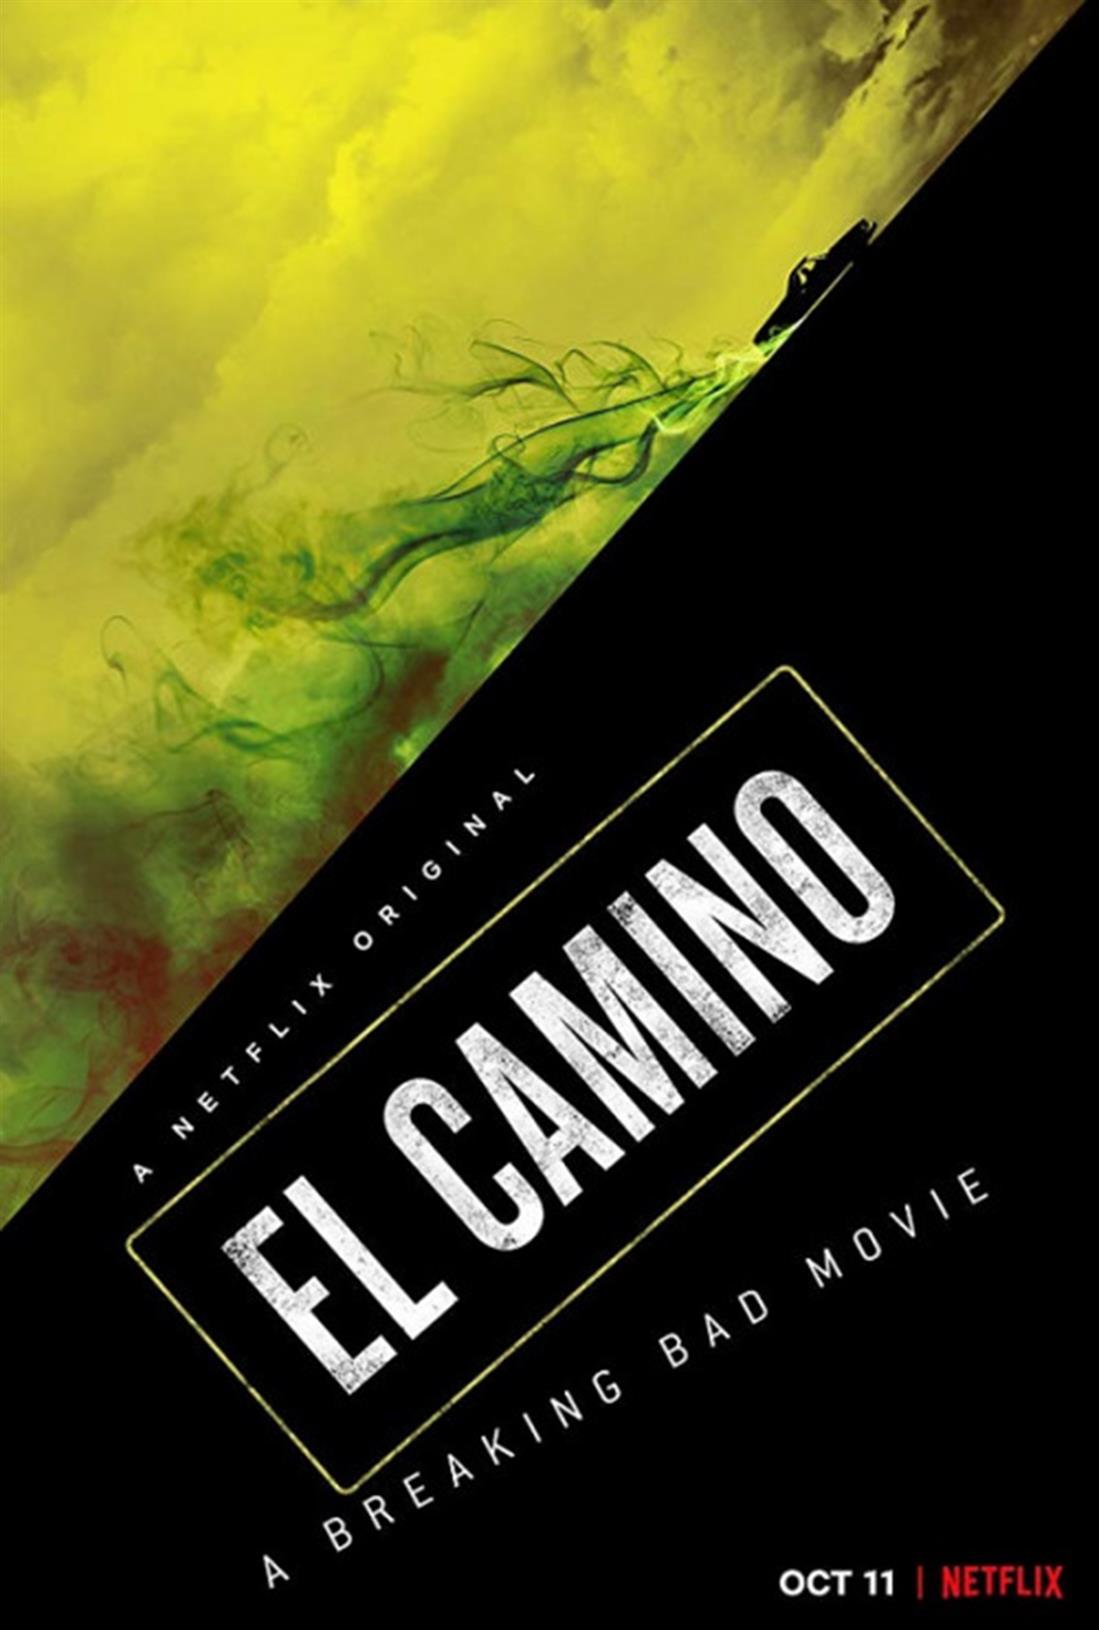 Breaking Bad - ταινία - El Camino